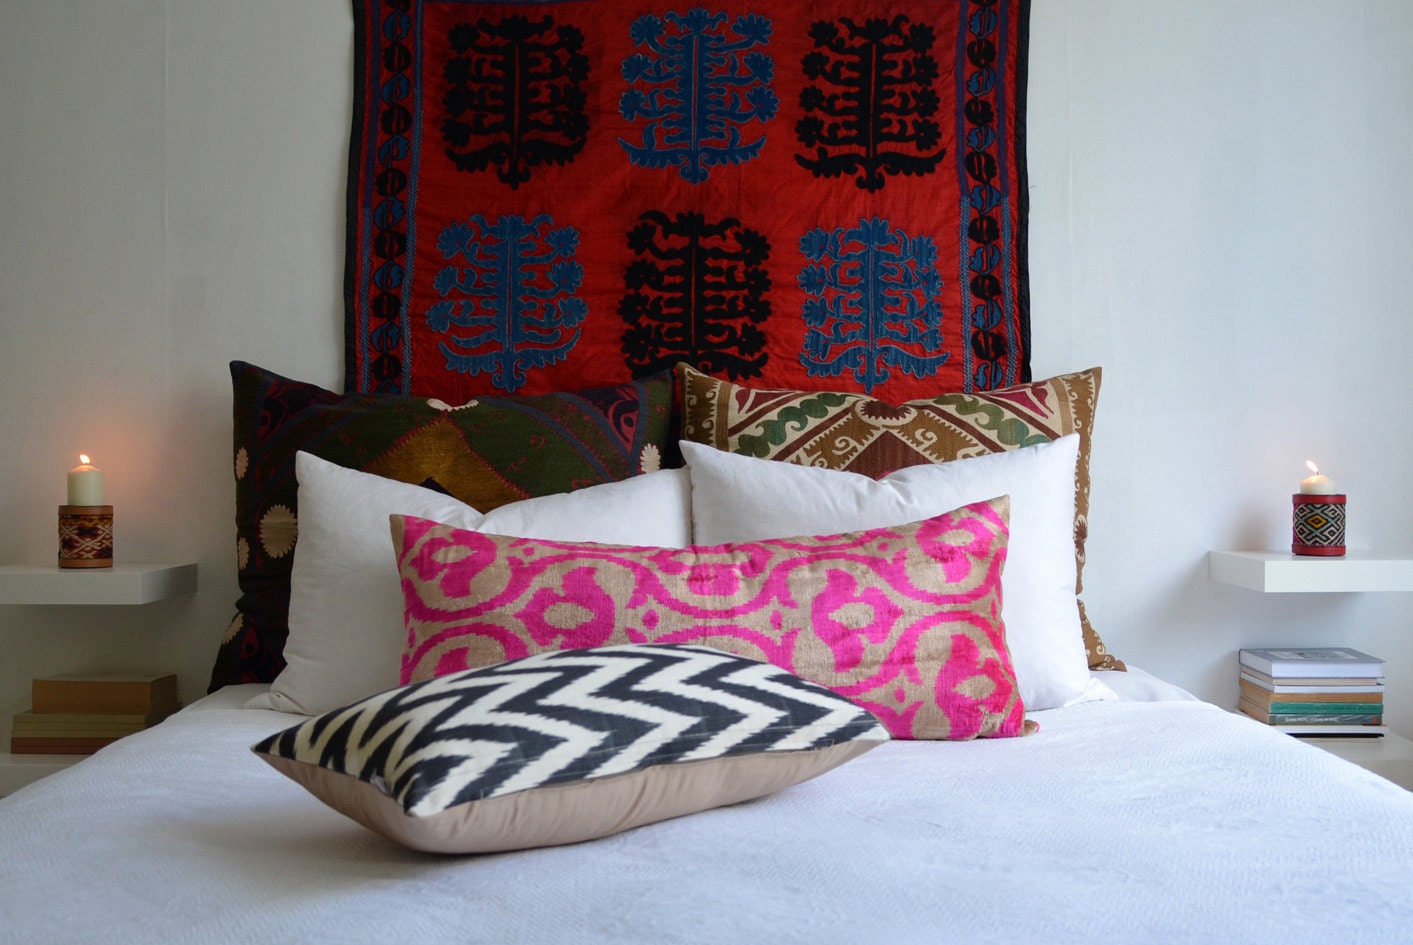 Sukan / SALE, Silk Velvet Ikat Pillow Cover - decorative covers - throw pillows - lumbar pillow cover - Beige, Pink Color